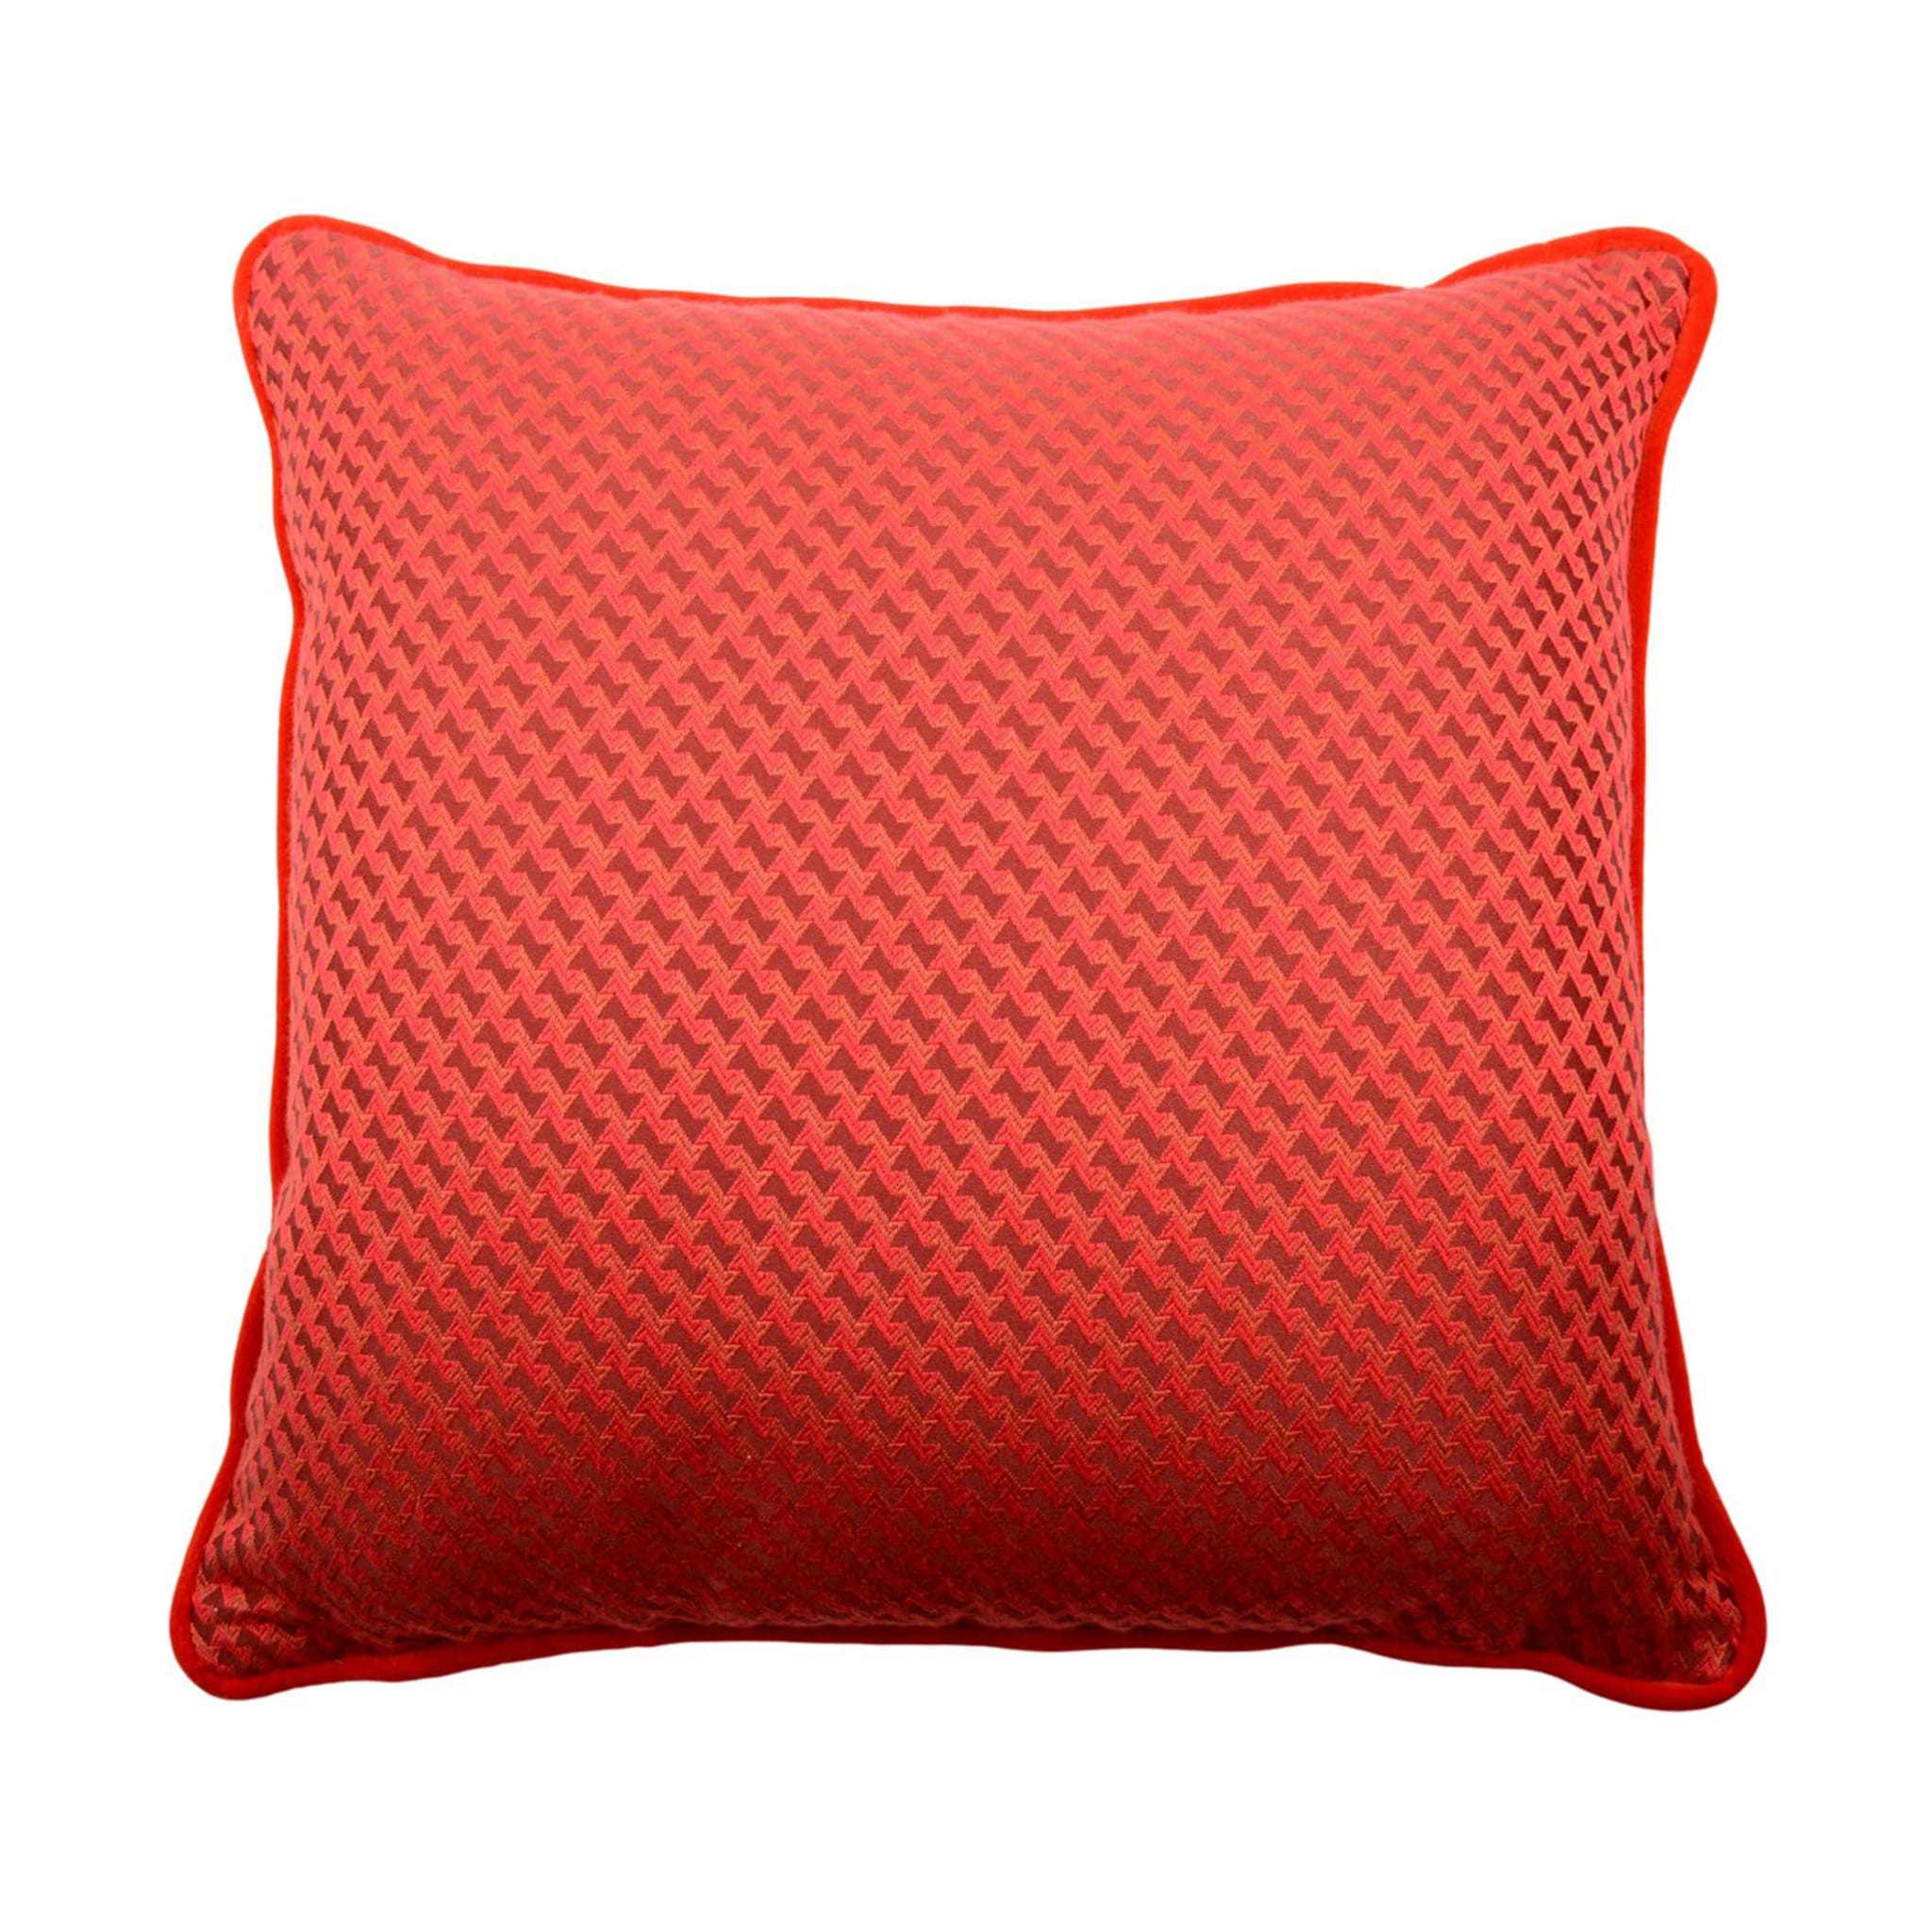 Coussin Carrè rouge en tissu jacquard à micro motifs - Vue principale